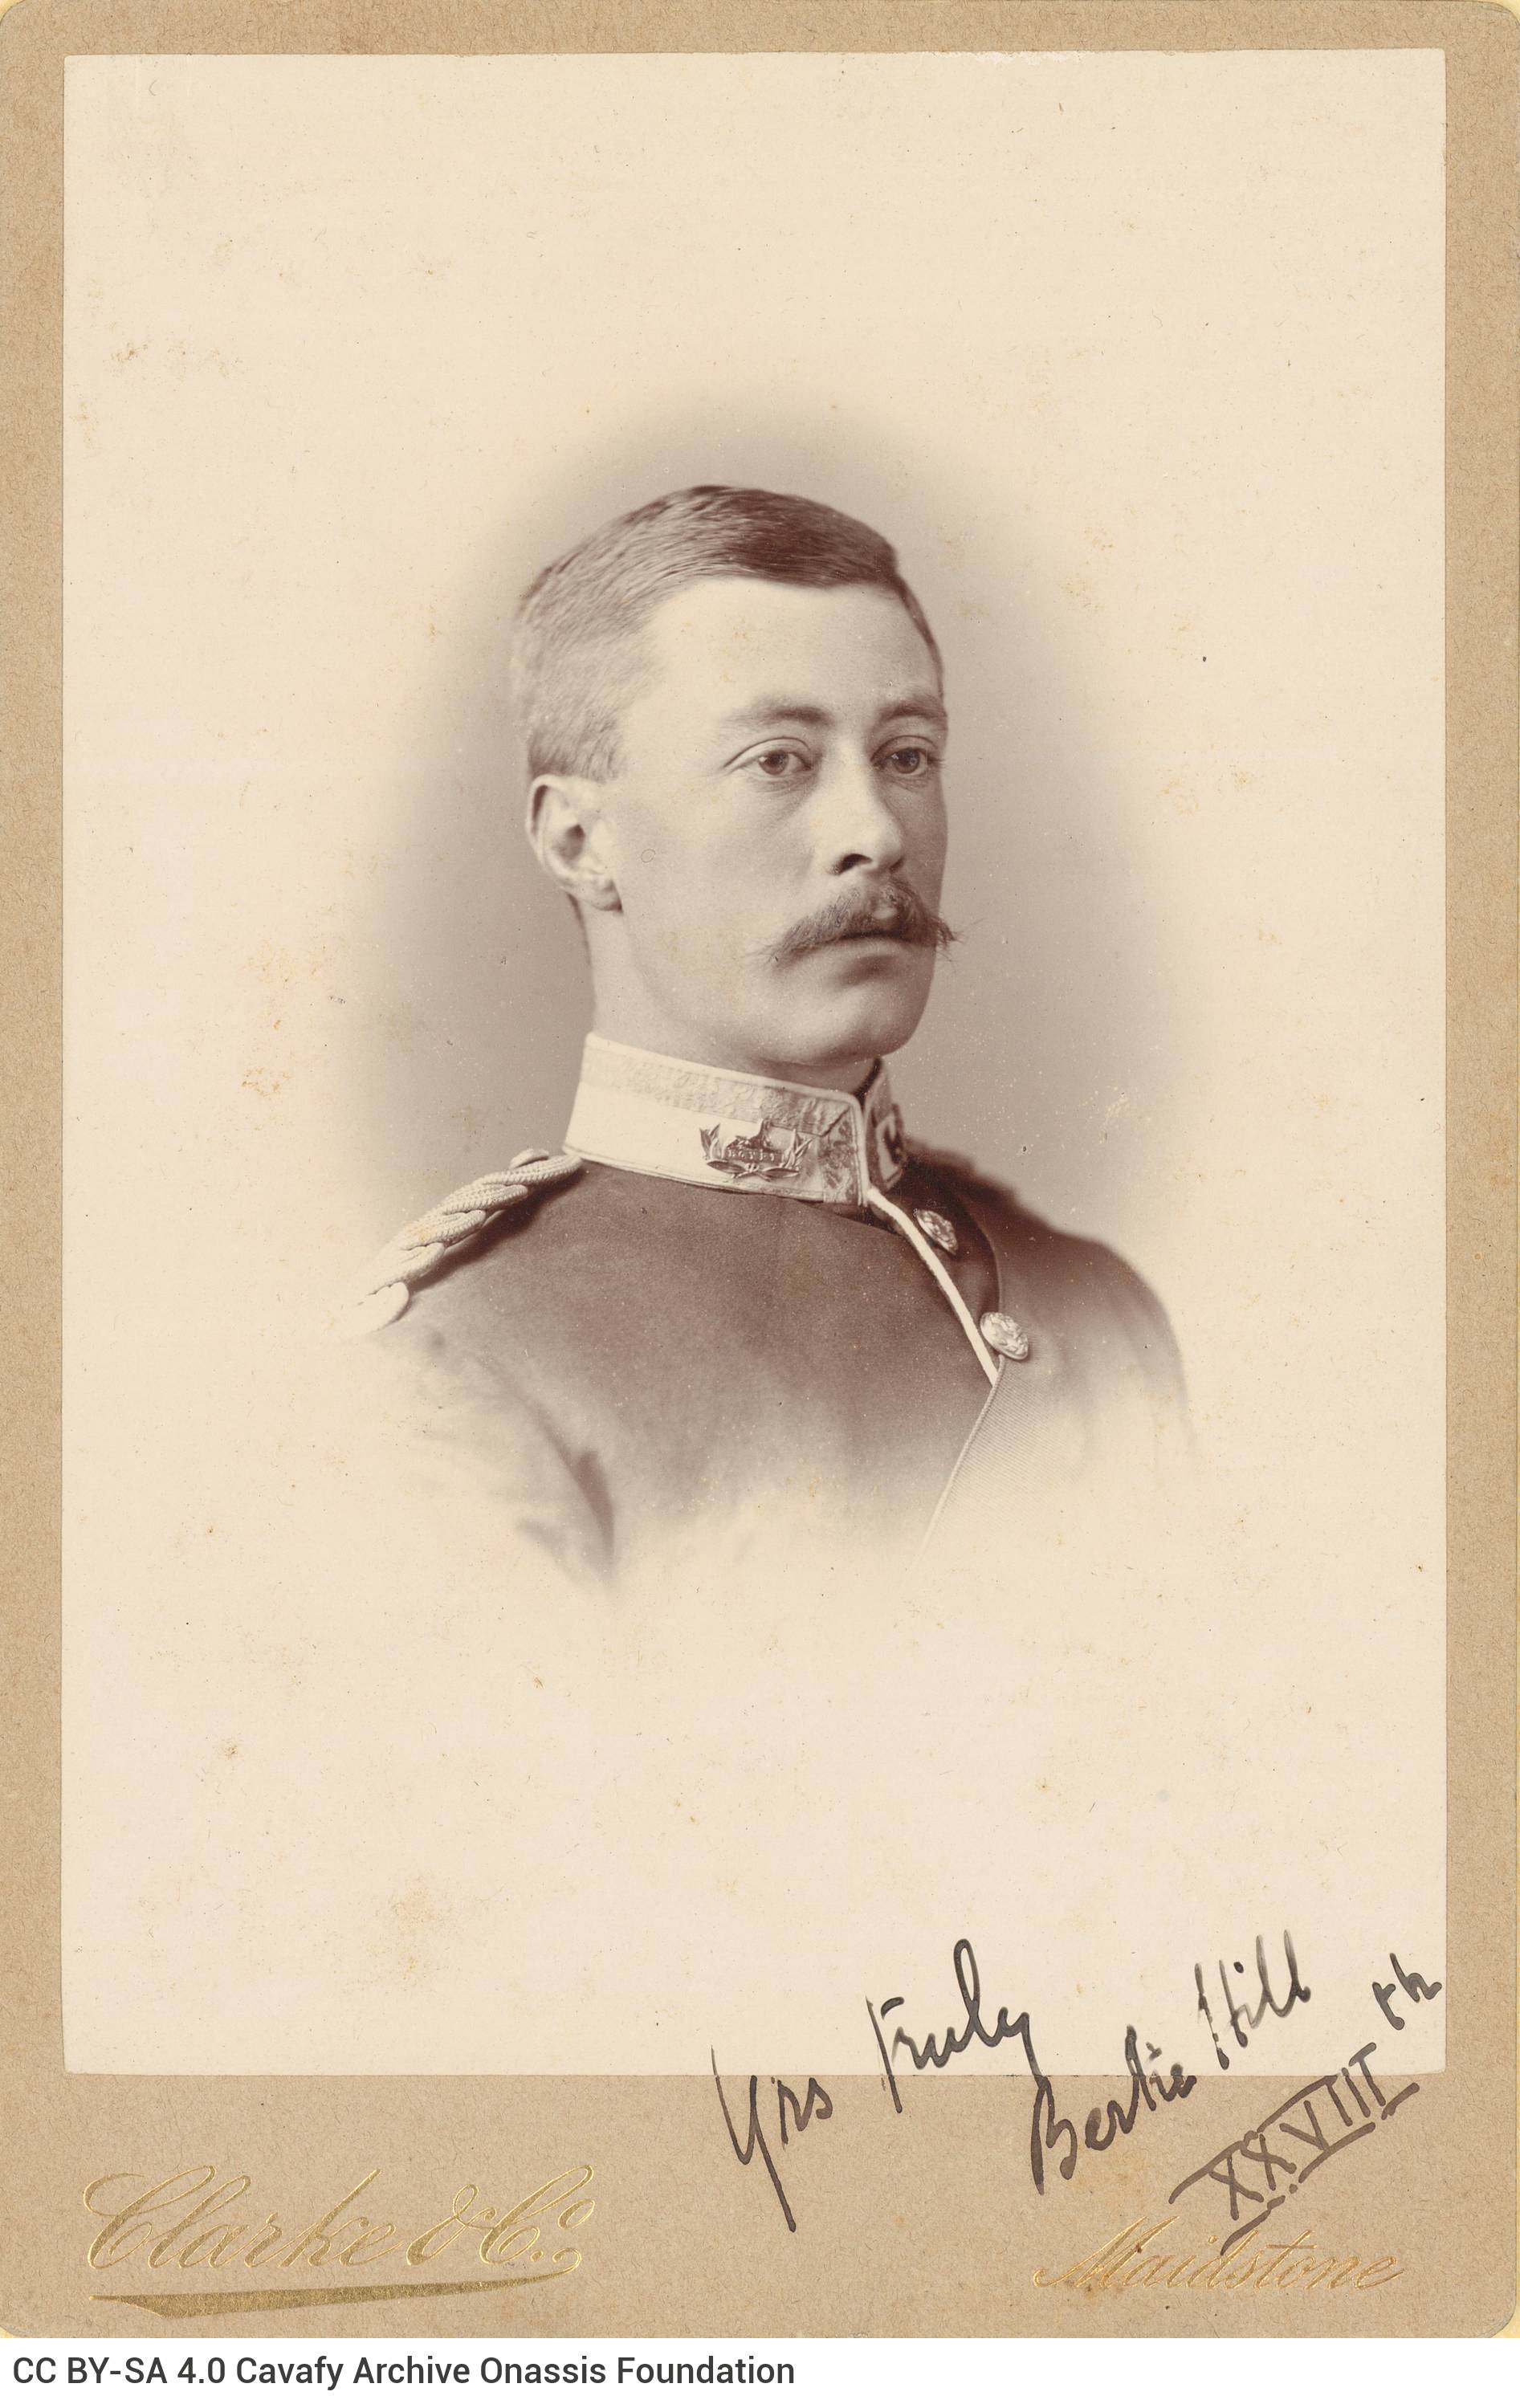 Photograph of Bertie Hill in a military uniform from Clarke & Co. in Maidstone, South East England. It bears a handwritten de